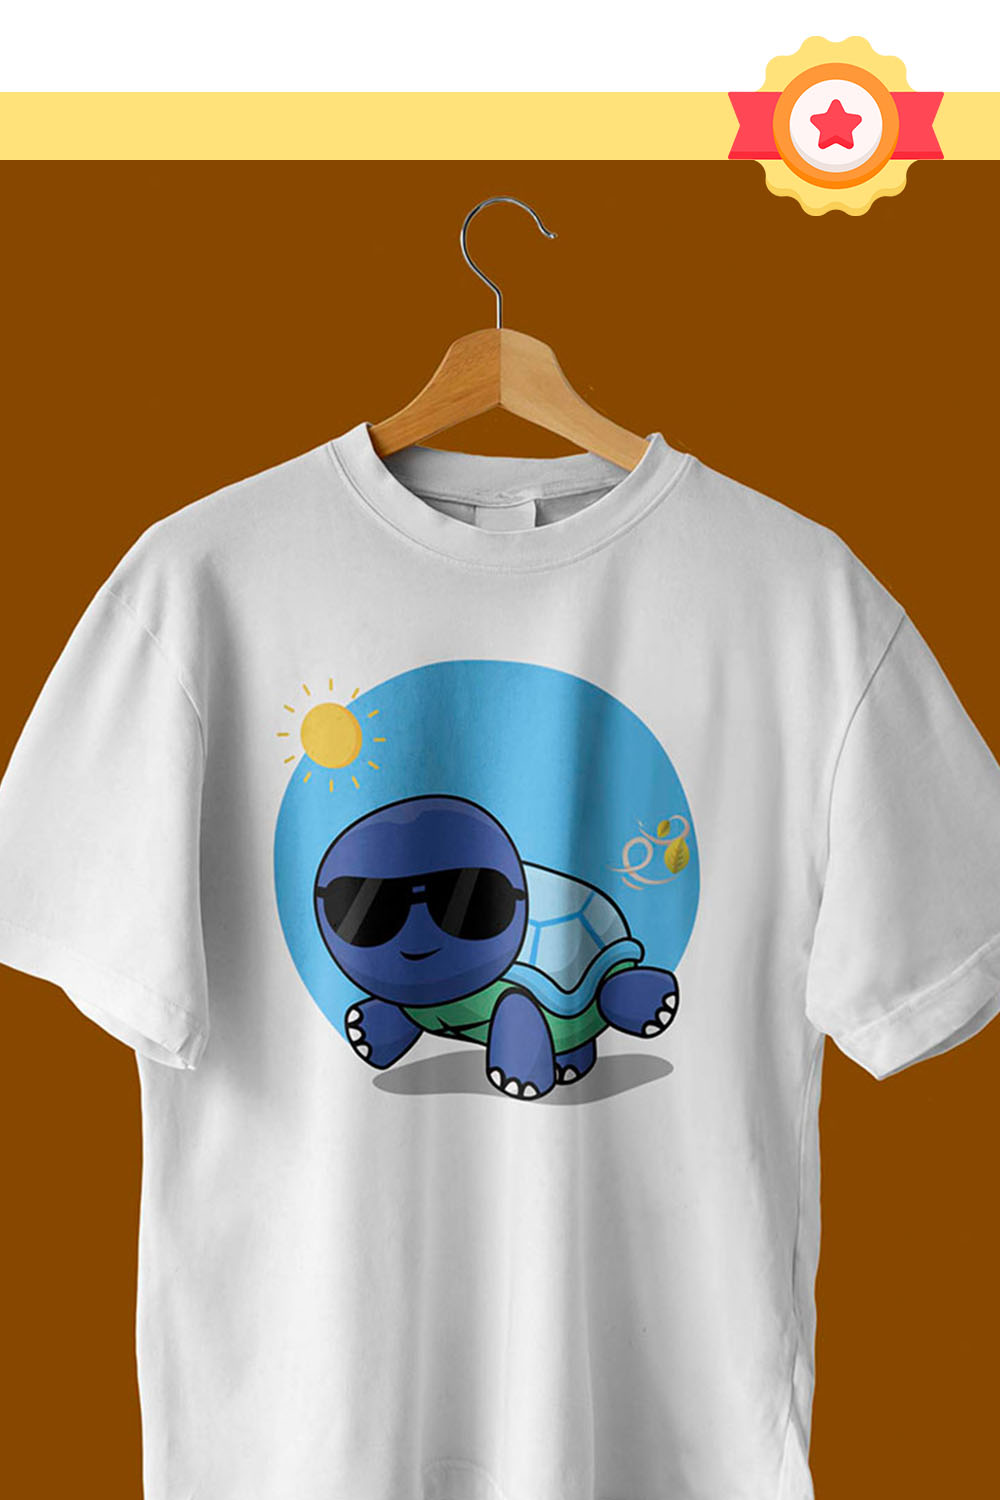 Cute Turtle Illustration T-Shirt Design Pinterest collage image.